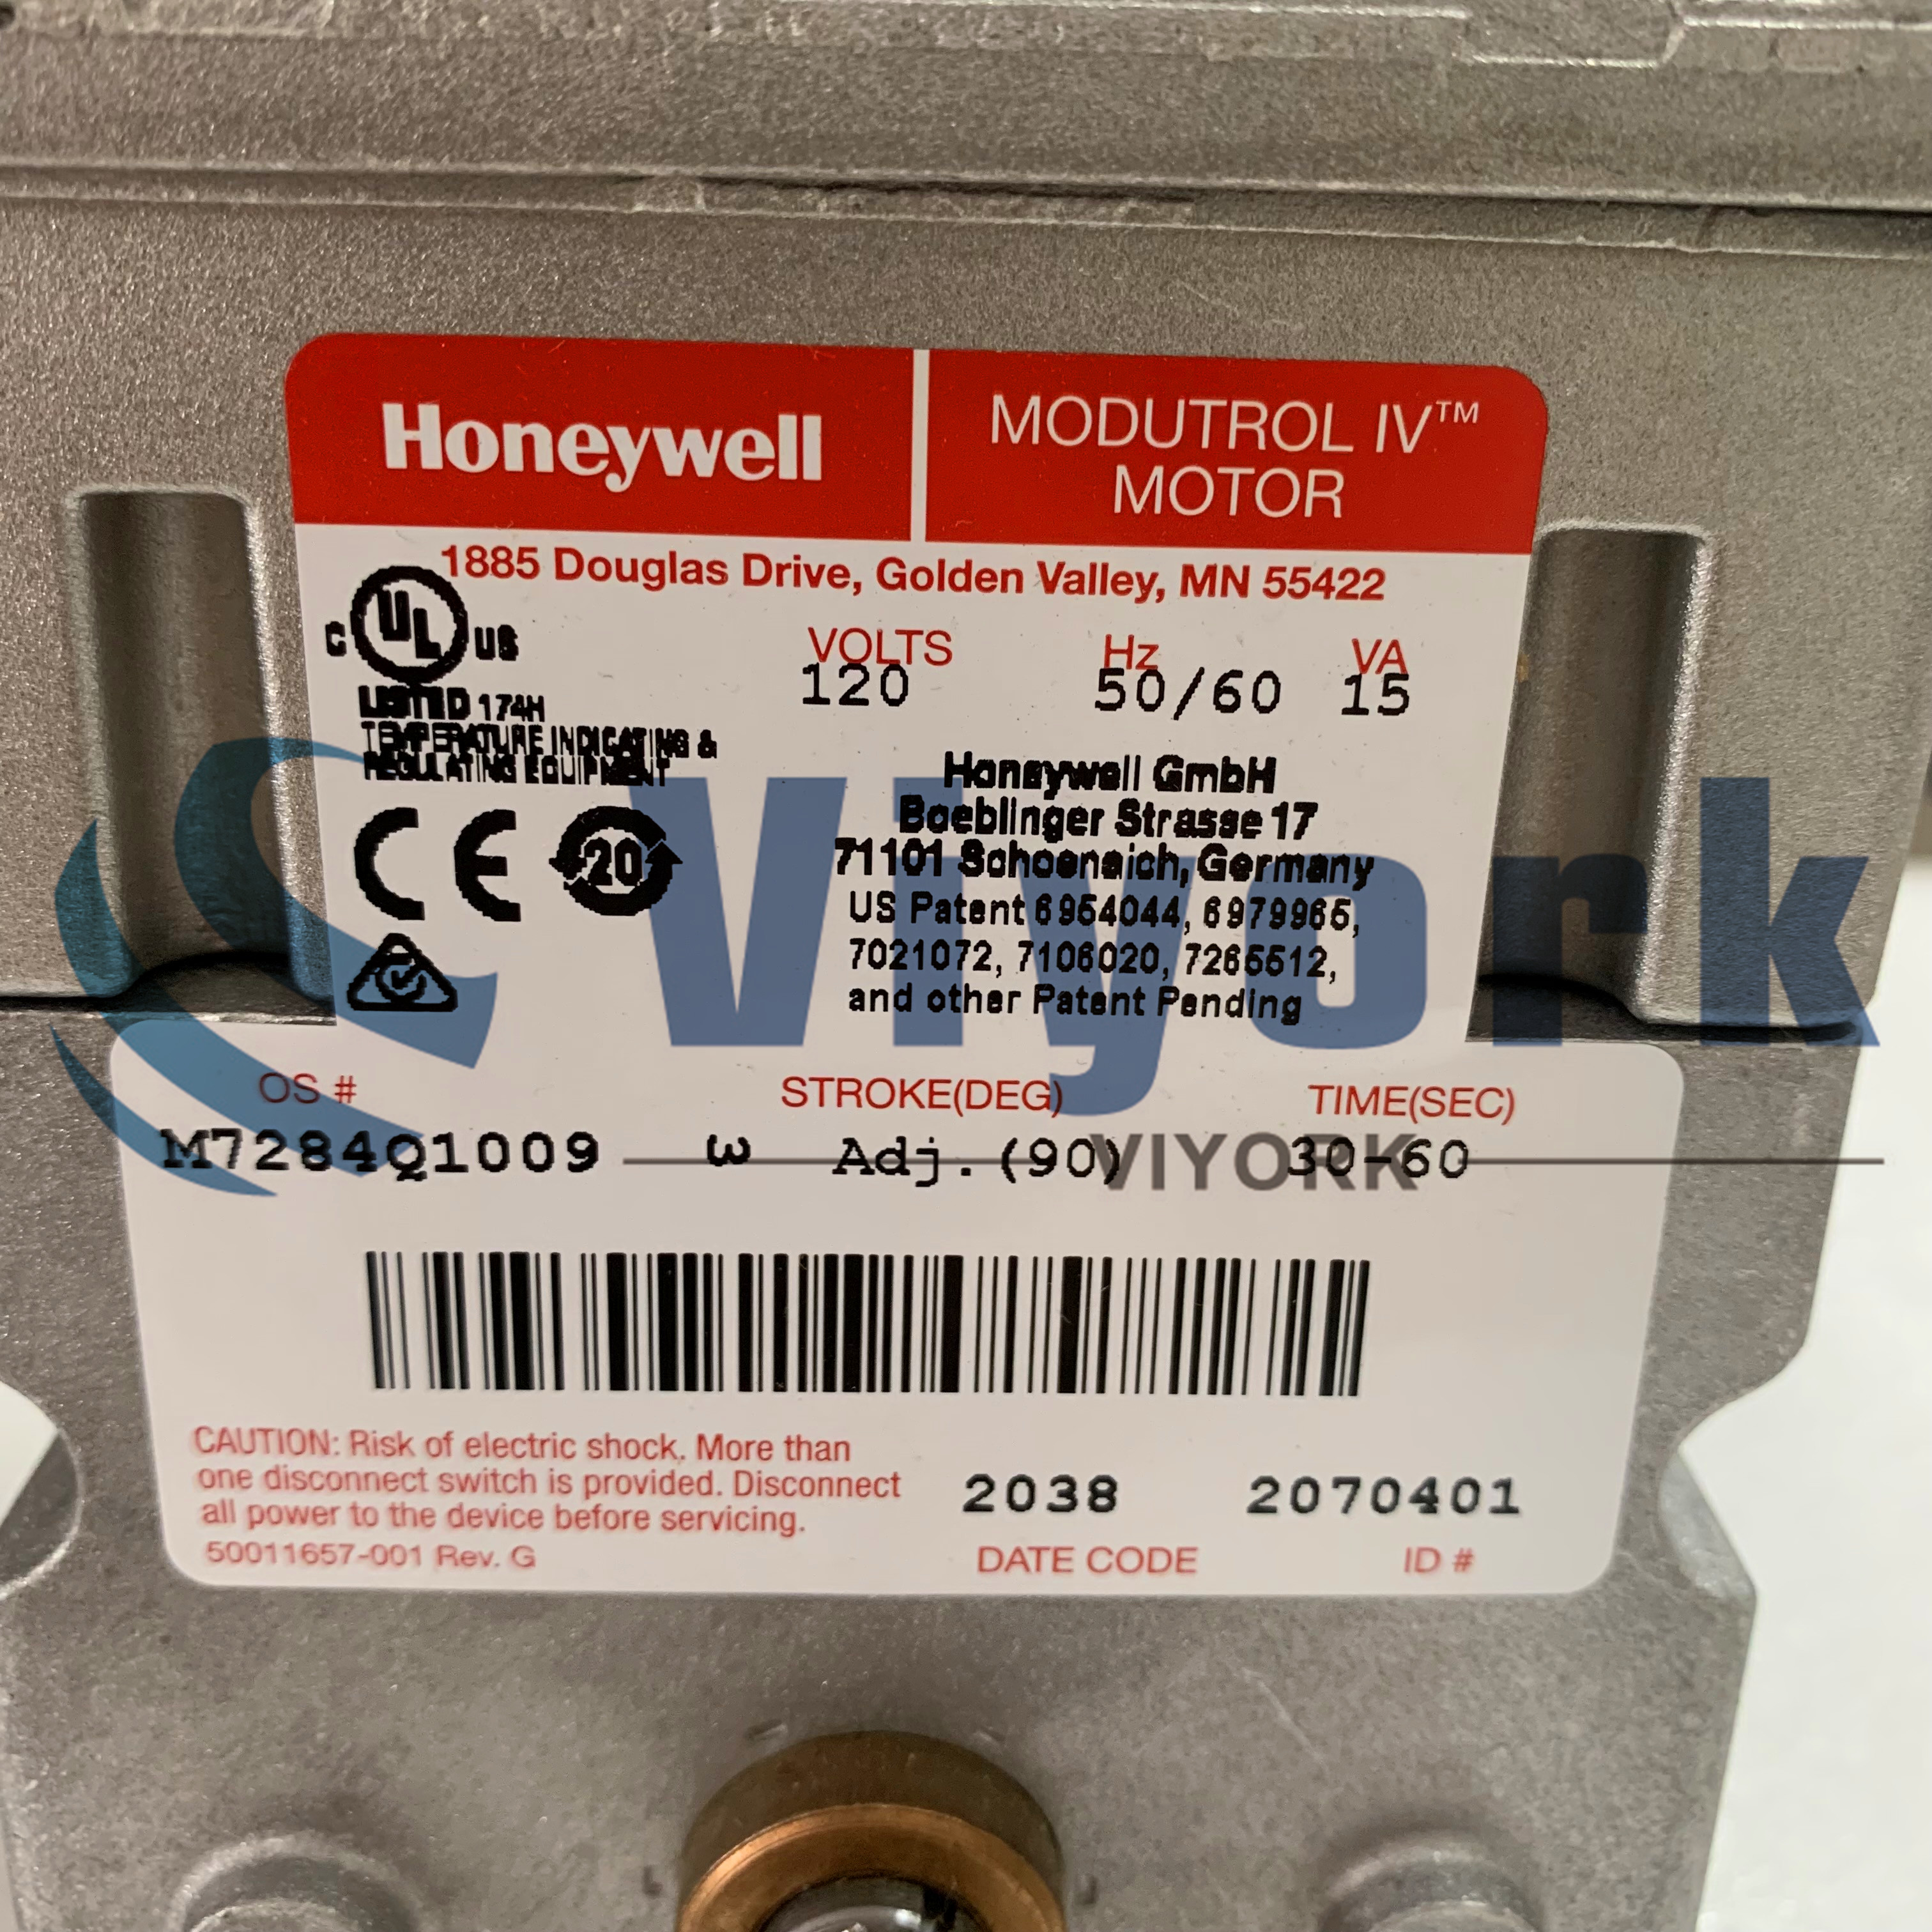 Honeywell M7284Q1009 MODUTROL IV MOTOR 4/20MA 120V 50/60HZ 15VA NEW